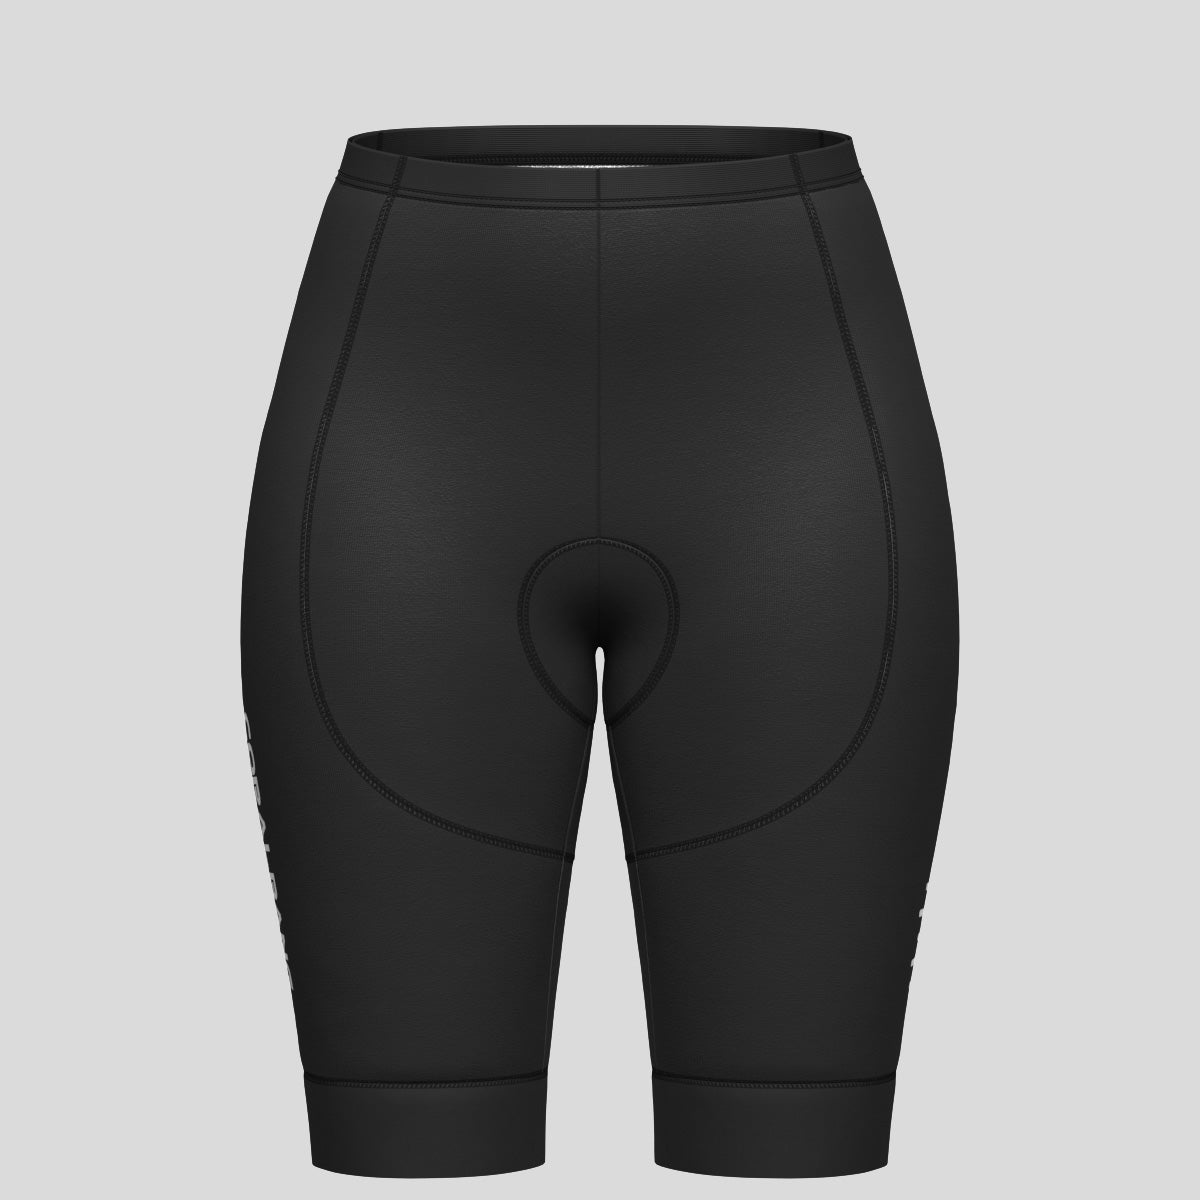 Minimal Solid Women's Cycling Shorts - Black